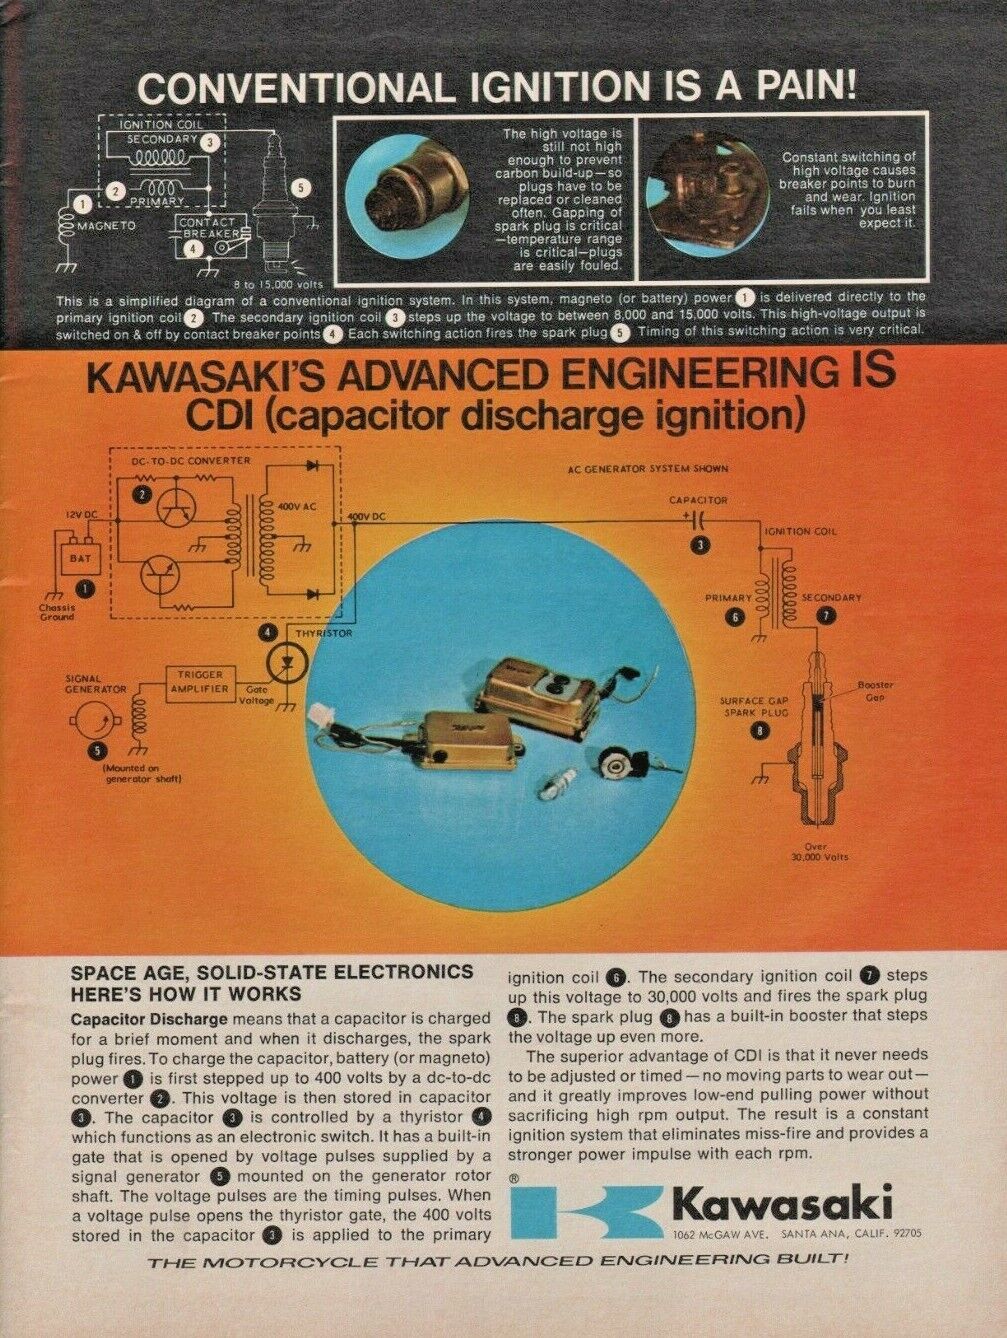 1971 Kawaski CDI Capacitor Discharge Ignition - Vintage Motorcycle Ad